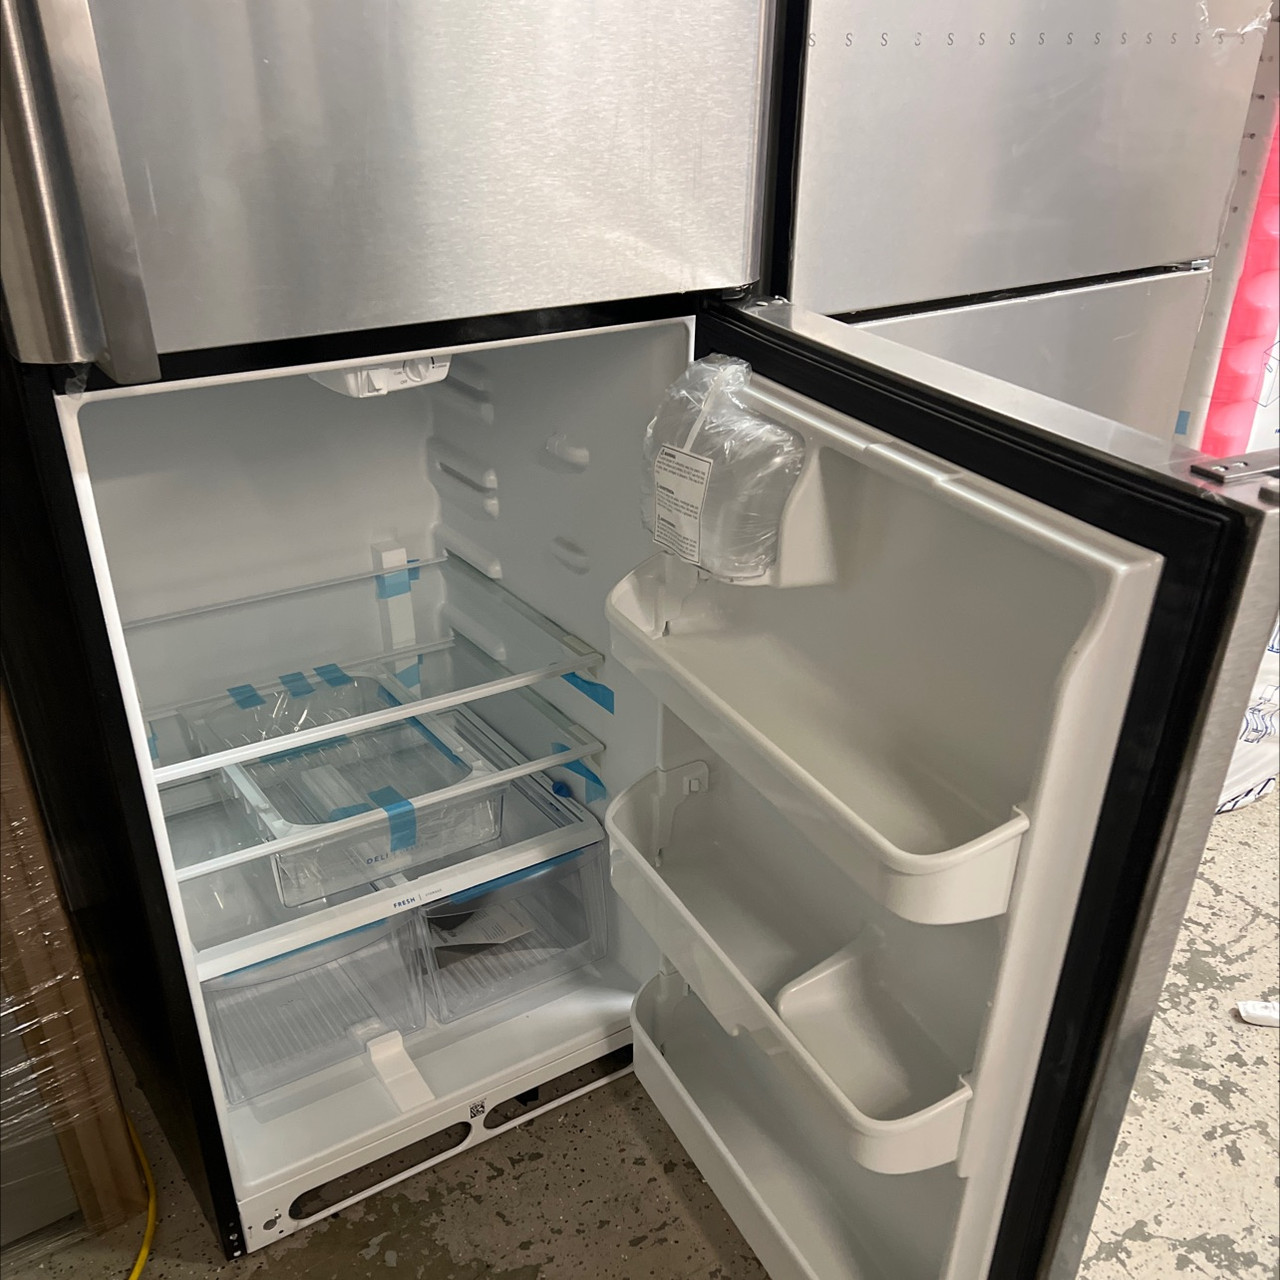 Frigidaire Refrigerators - Top Freezer 20.5 Cu Ft - FRTD2021AS